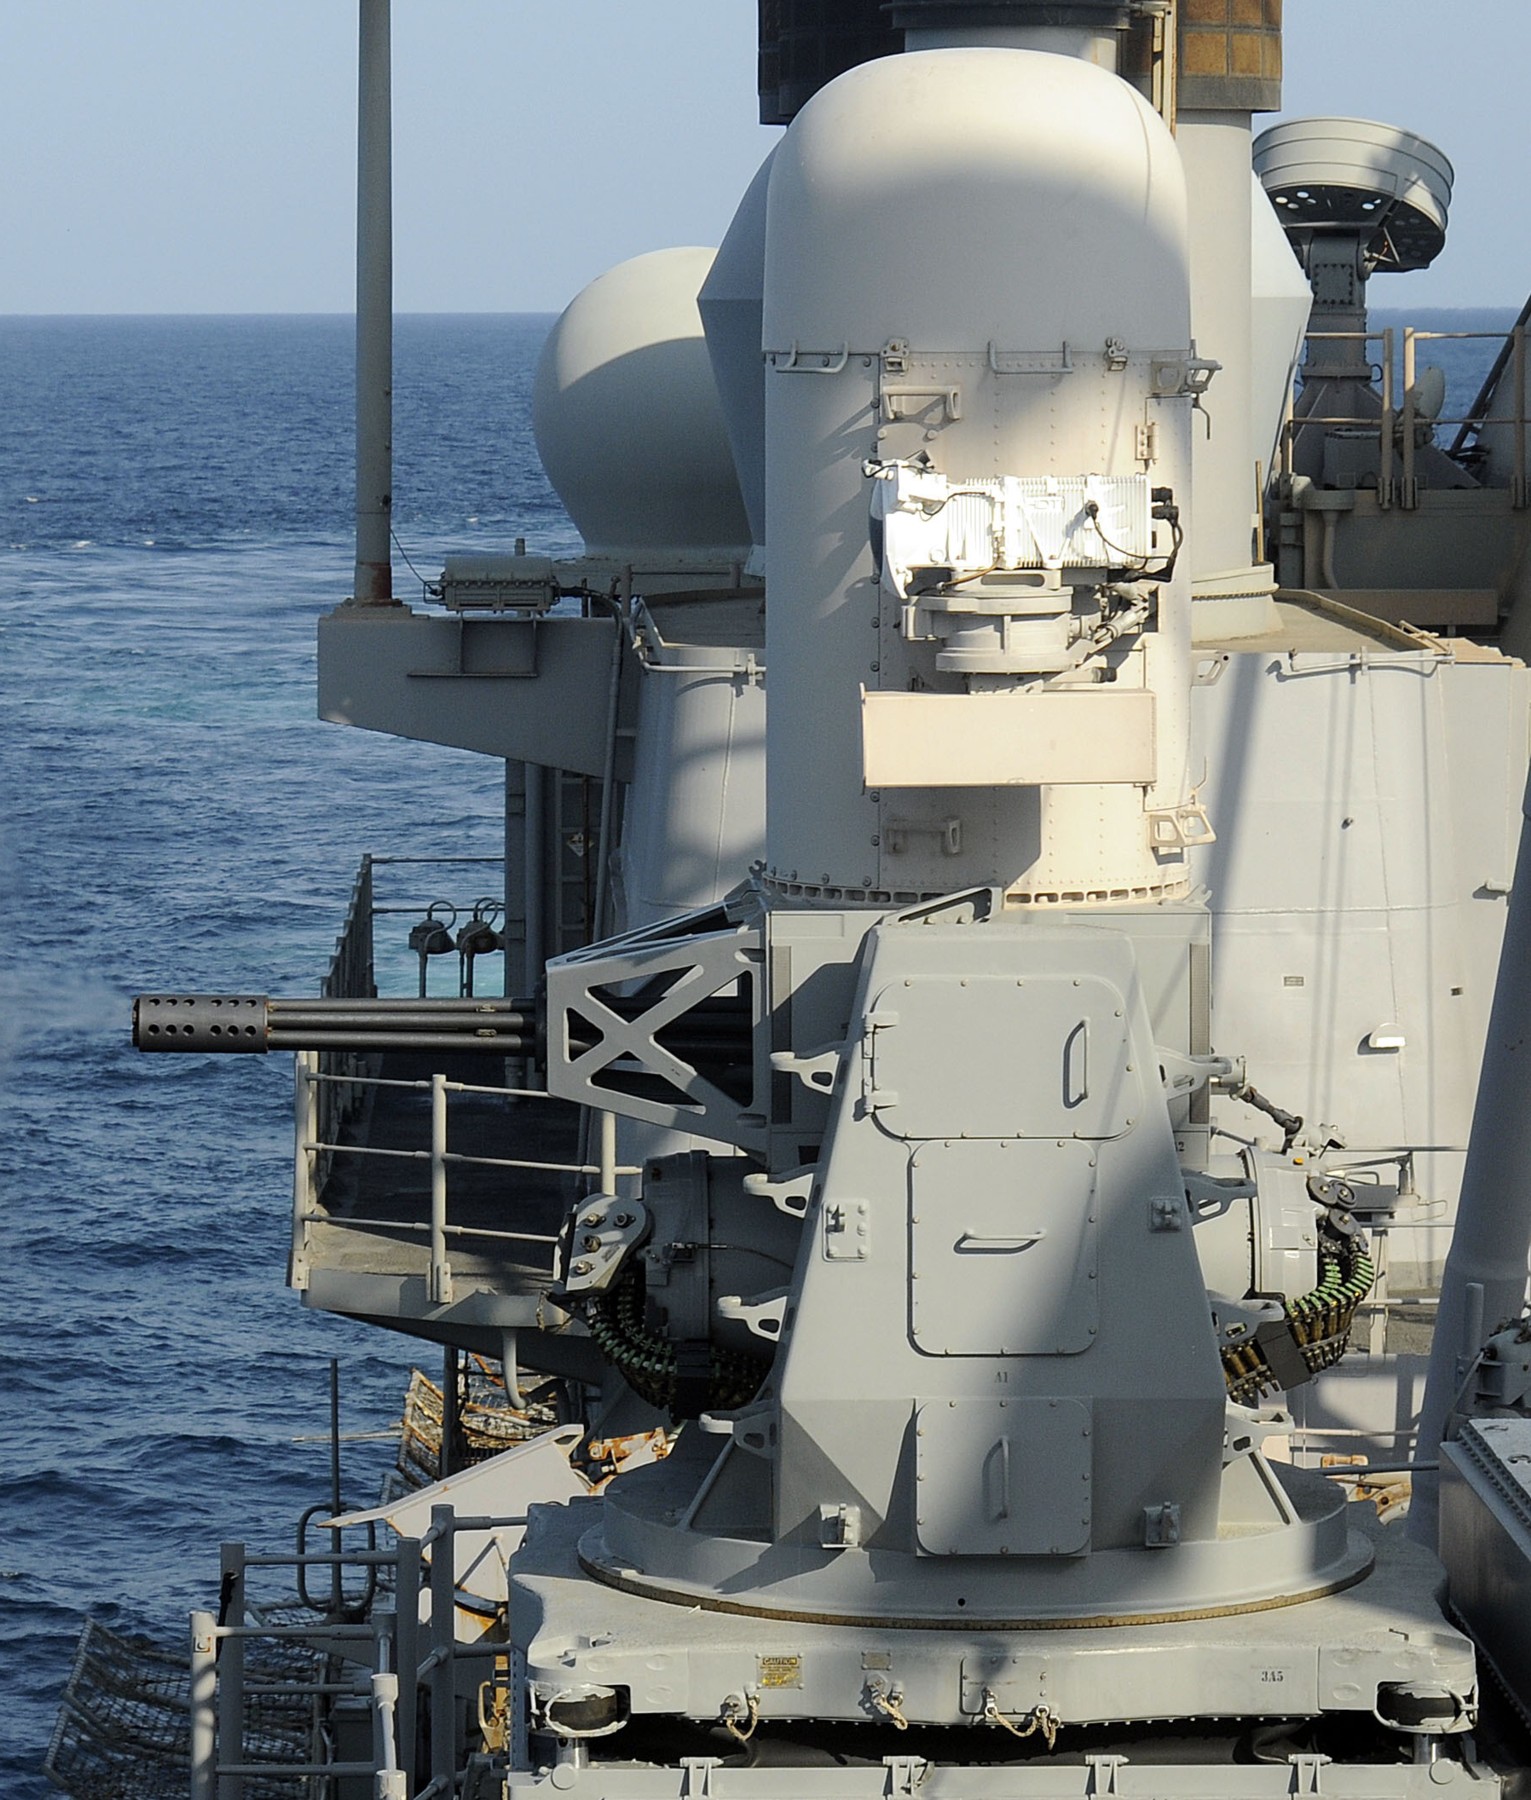 cg-65 uss chosin ticonderoga class guided missile cruiser aegis us navy mk.15 phalanx close-in weapon system ciws 23